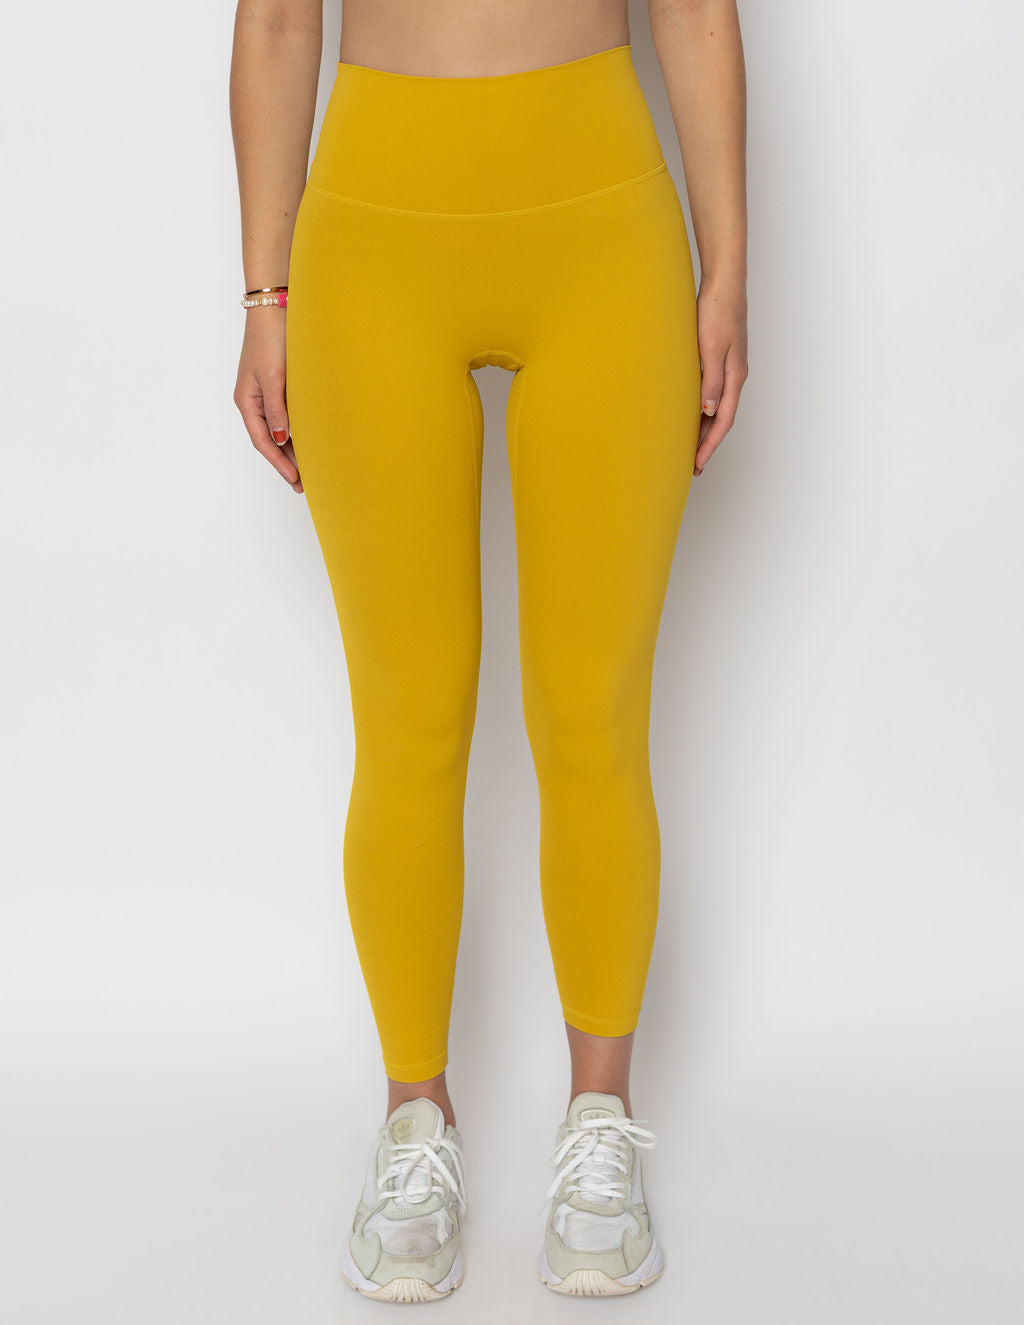 Prisma Women's Skinny Fit Ankle Leggings - Yellow( Lemon )